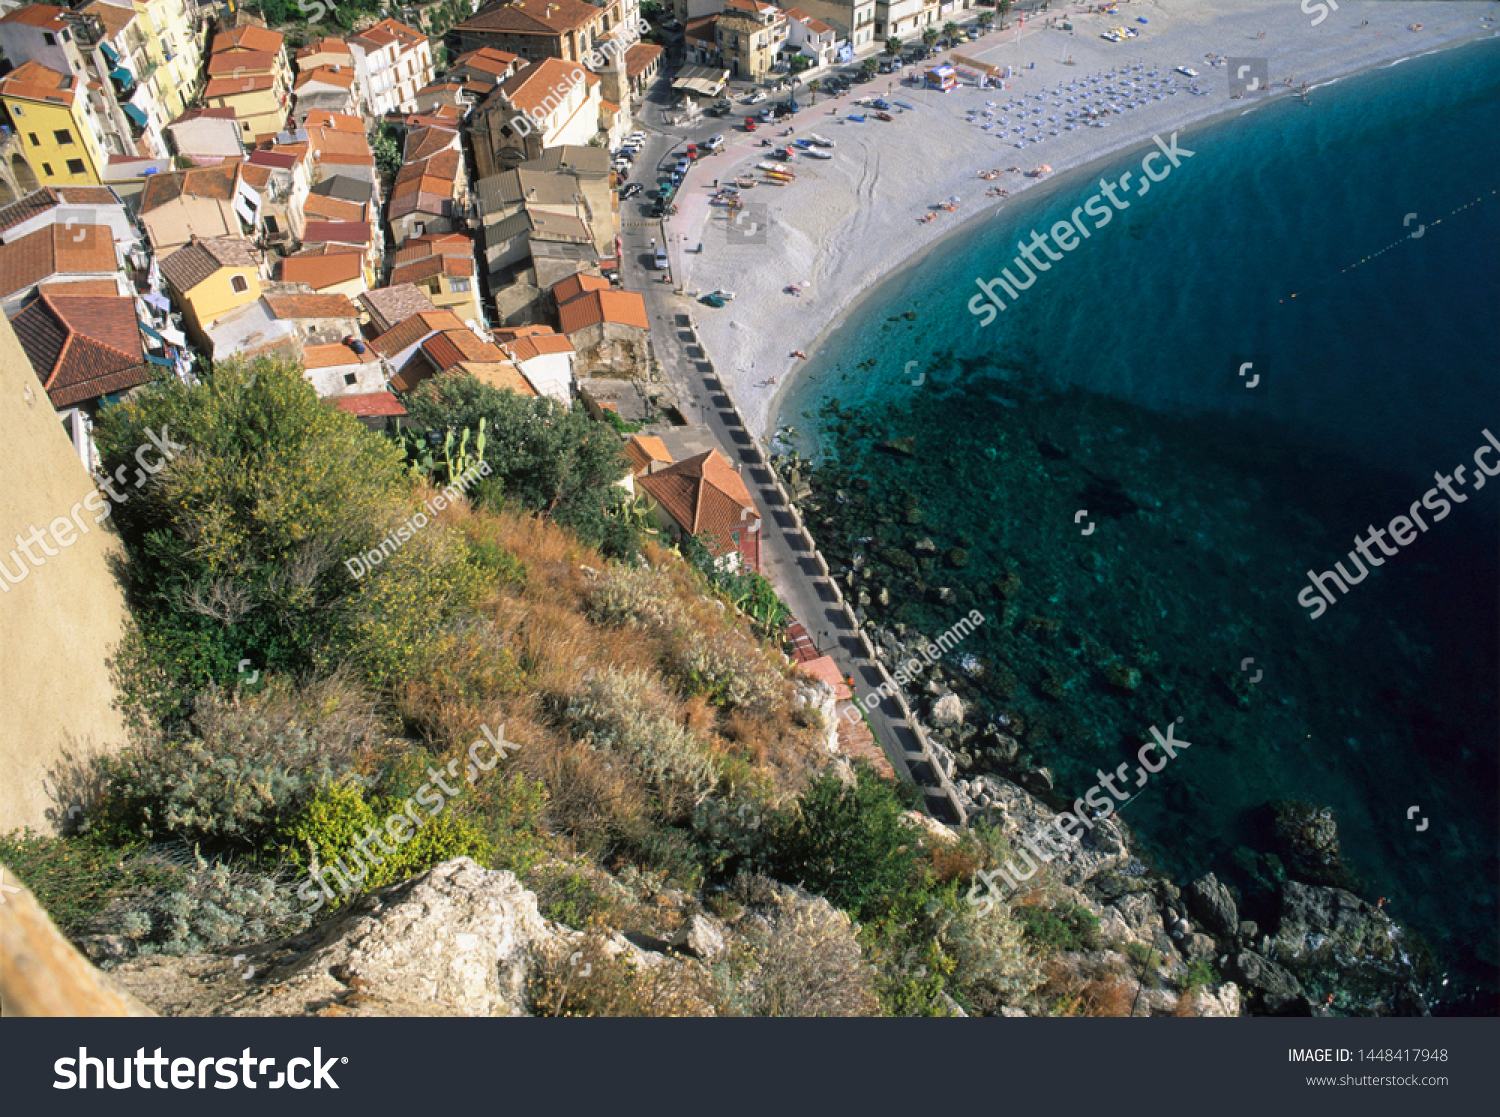 Scilla, district of Reggio Calabria, Calabria, Italy, view of the village with the Marina Grande beach seen from the castle #1448417948